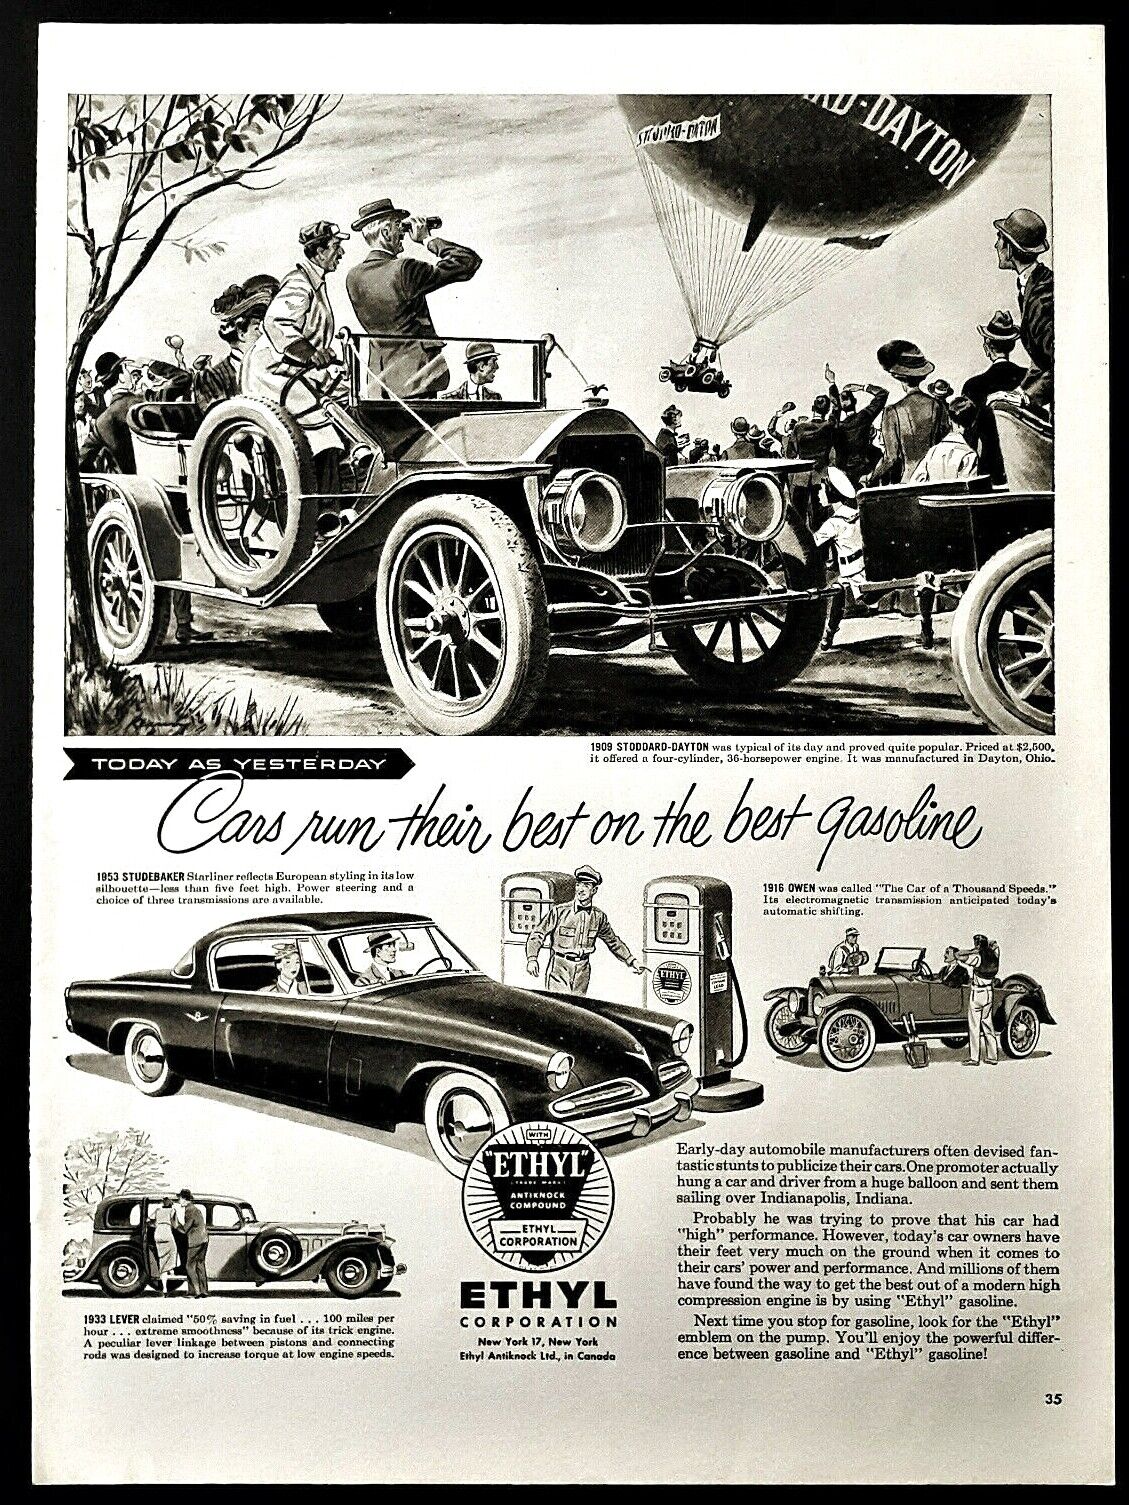  Ethyl gasoline ad classic car vntage 1953 original print advertisement